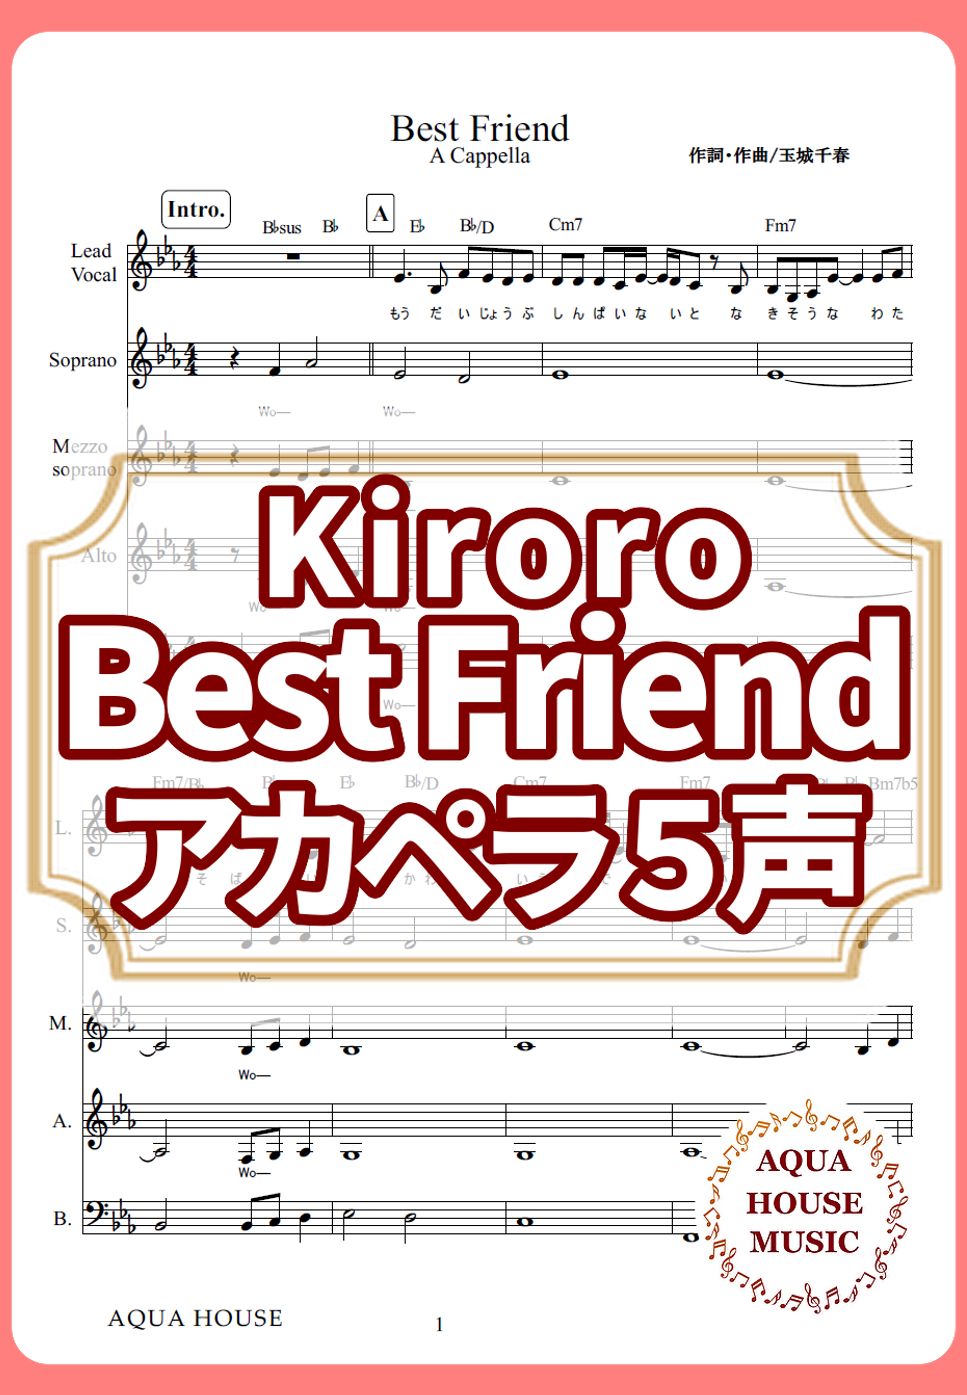 Kiroro - Best Friend (アカペラ楽譜♪５声ボイパなし) by 飯田 亜紗子